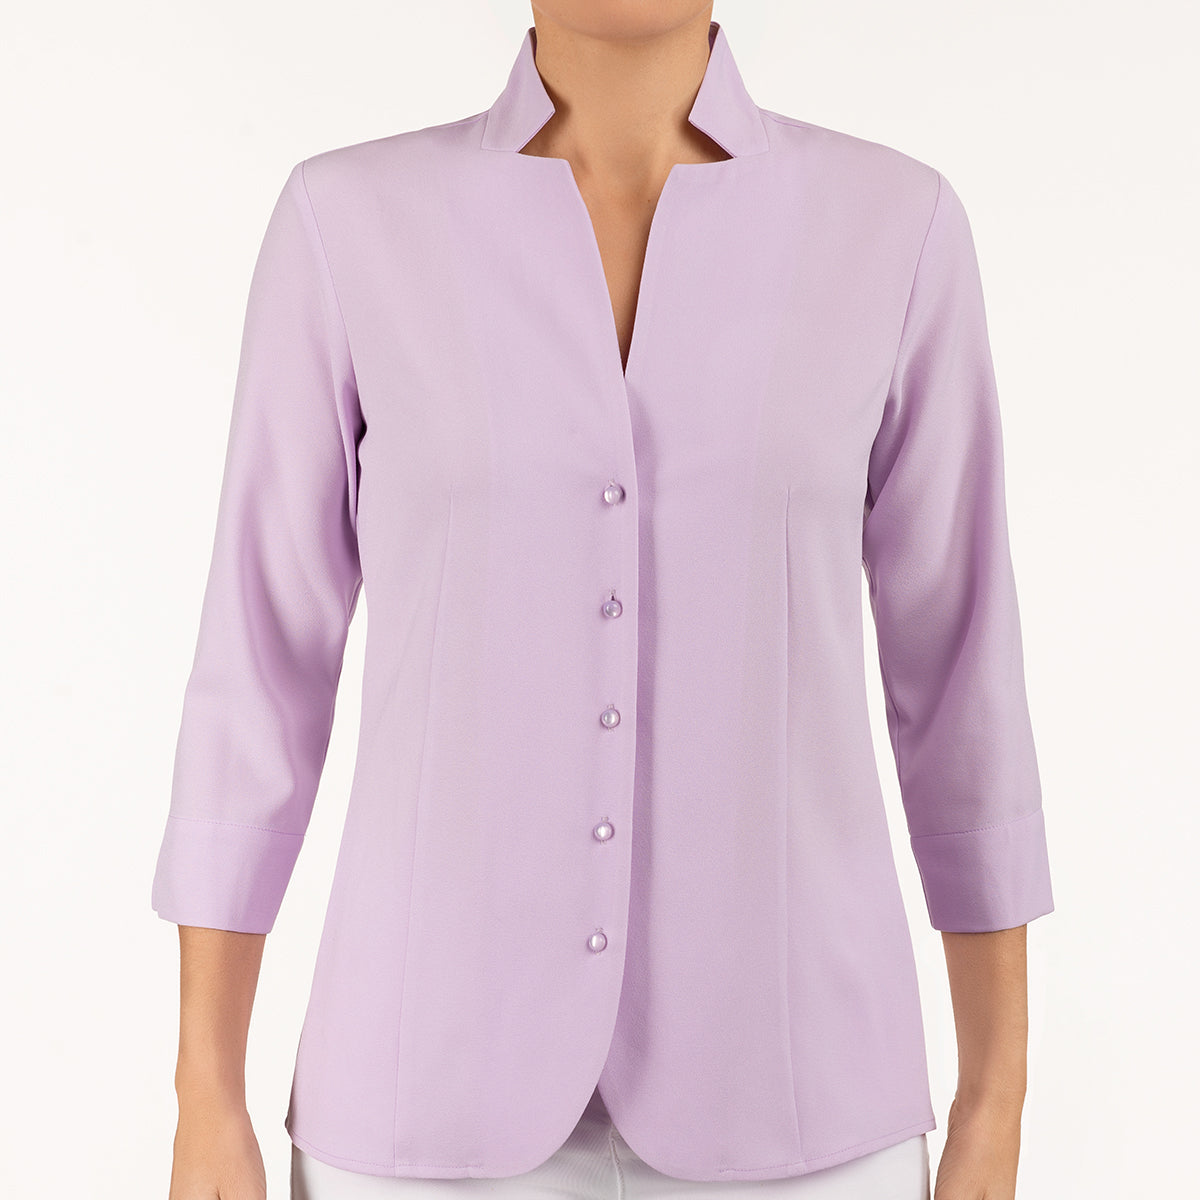 Inverted Notch Collar Shirt in Lilac – Leggiadro